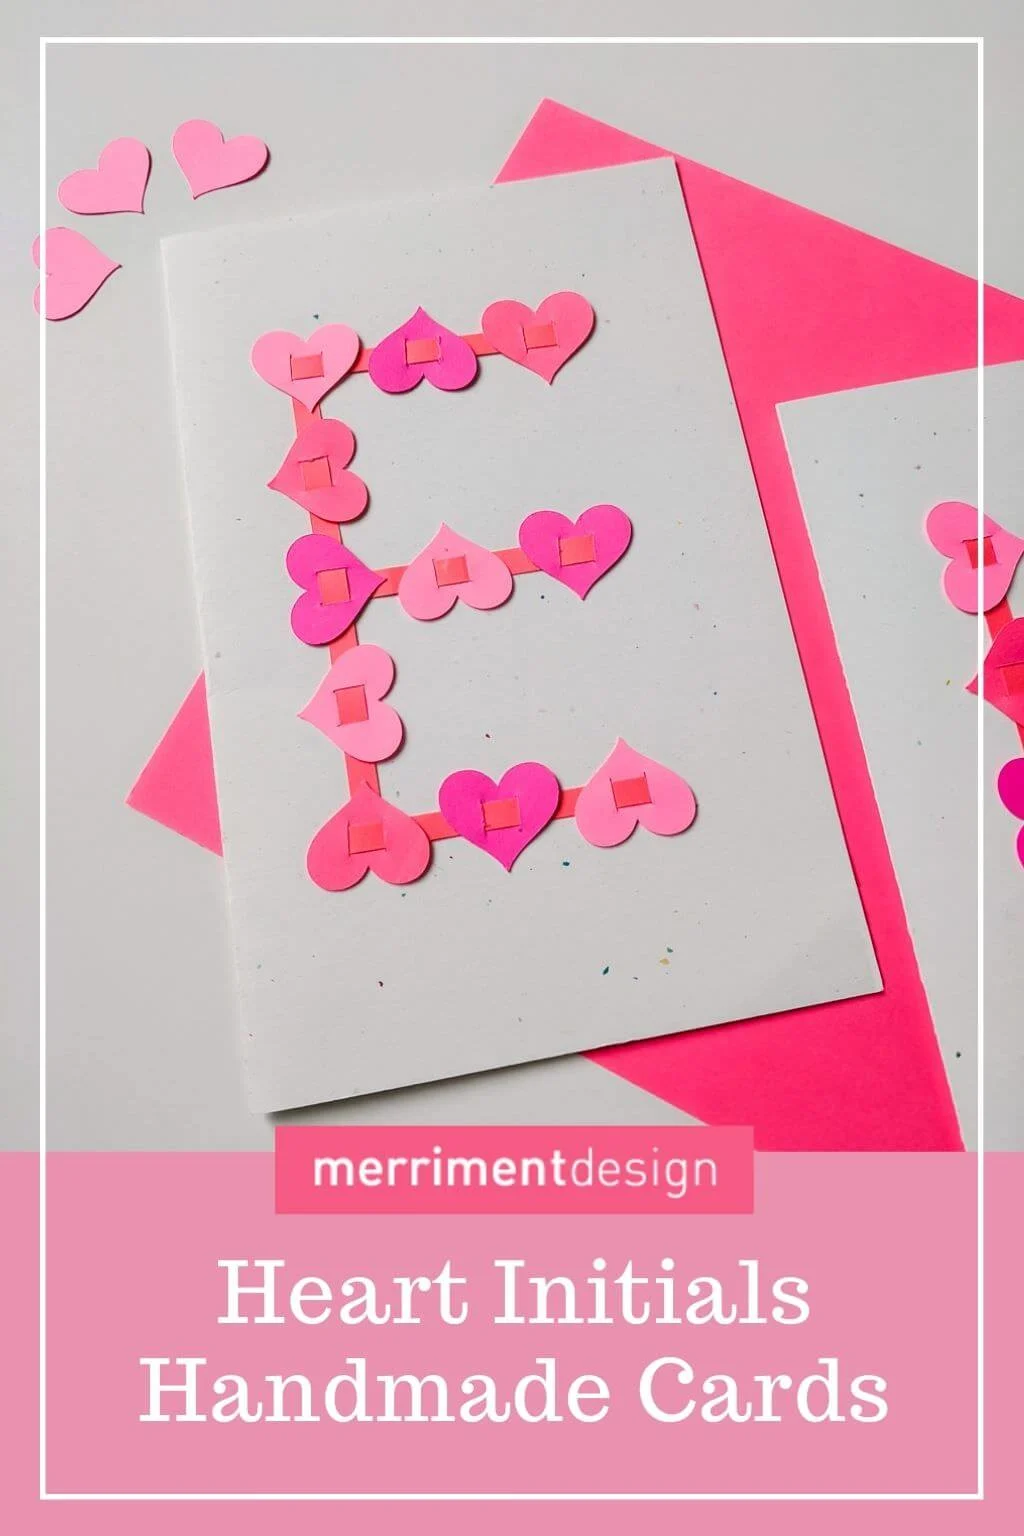 Heart alphabet letter handmade Valentine's Day card or valentines artwork